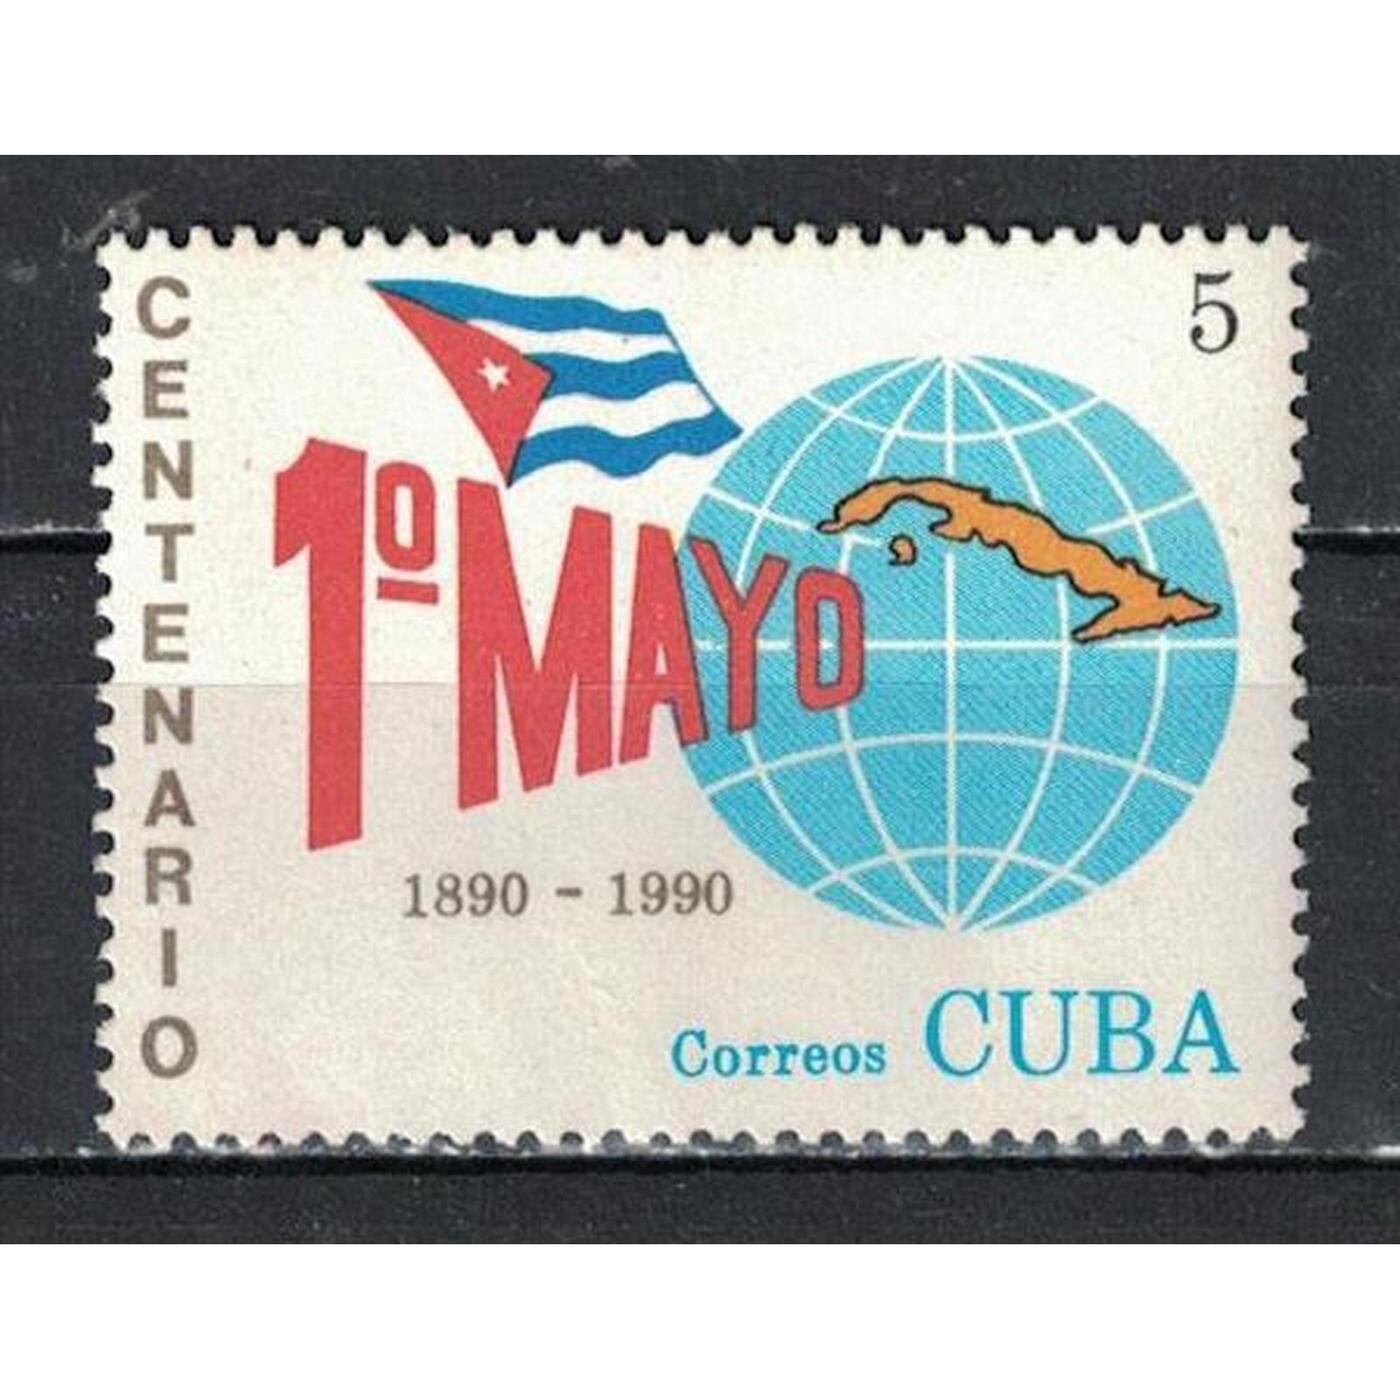 Кубинские марки. Марки Куба космос. Куба 1990 года марка. Марка Кубы Республика Куба.